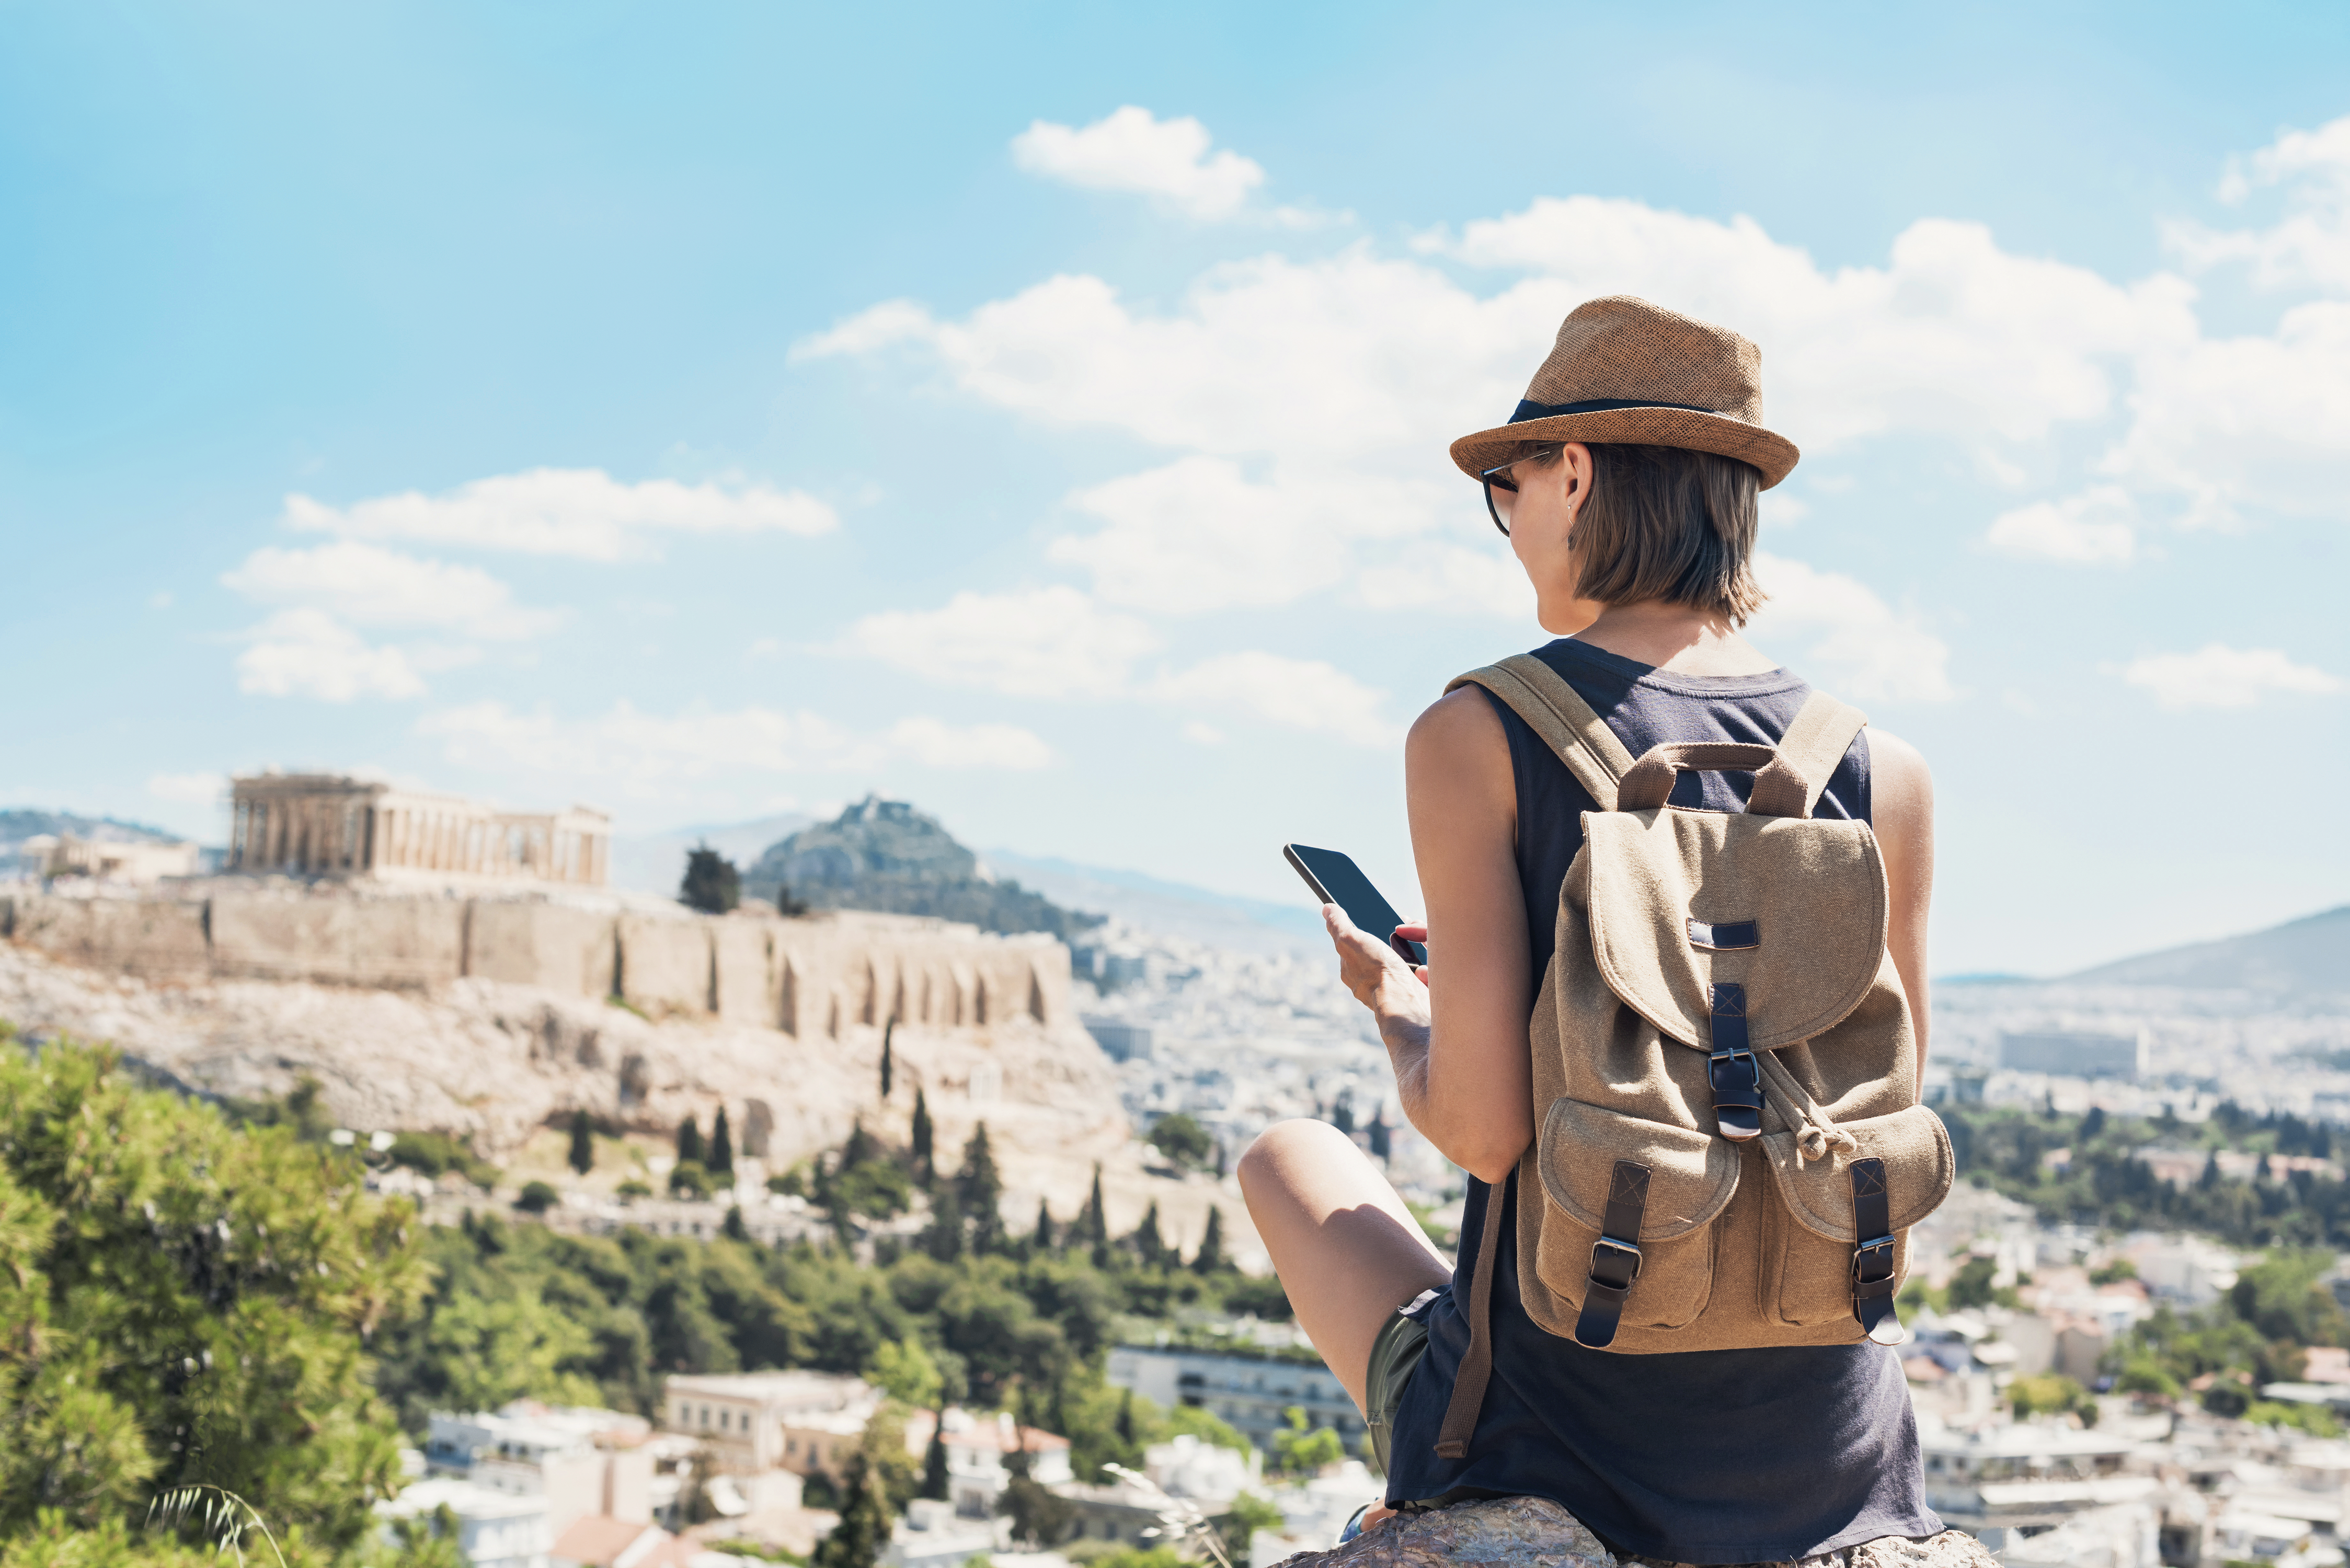 App helps travelers decide on next vacation destination